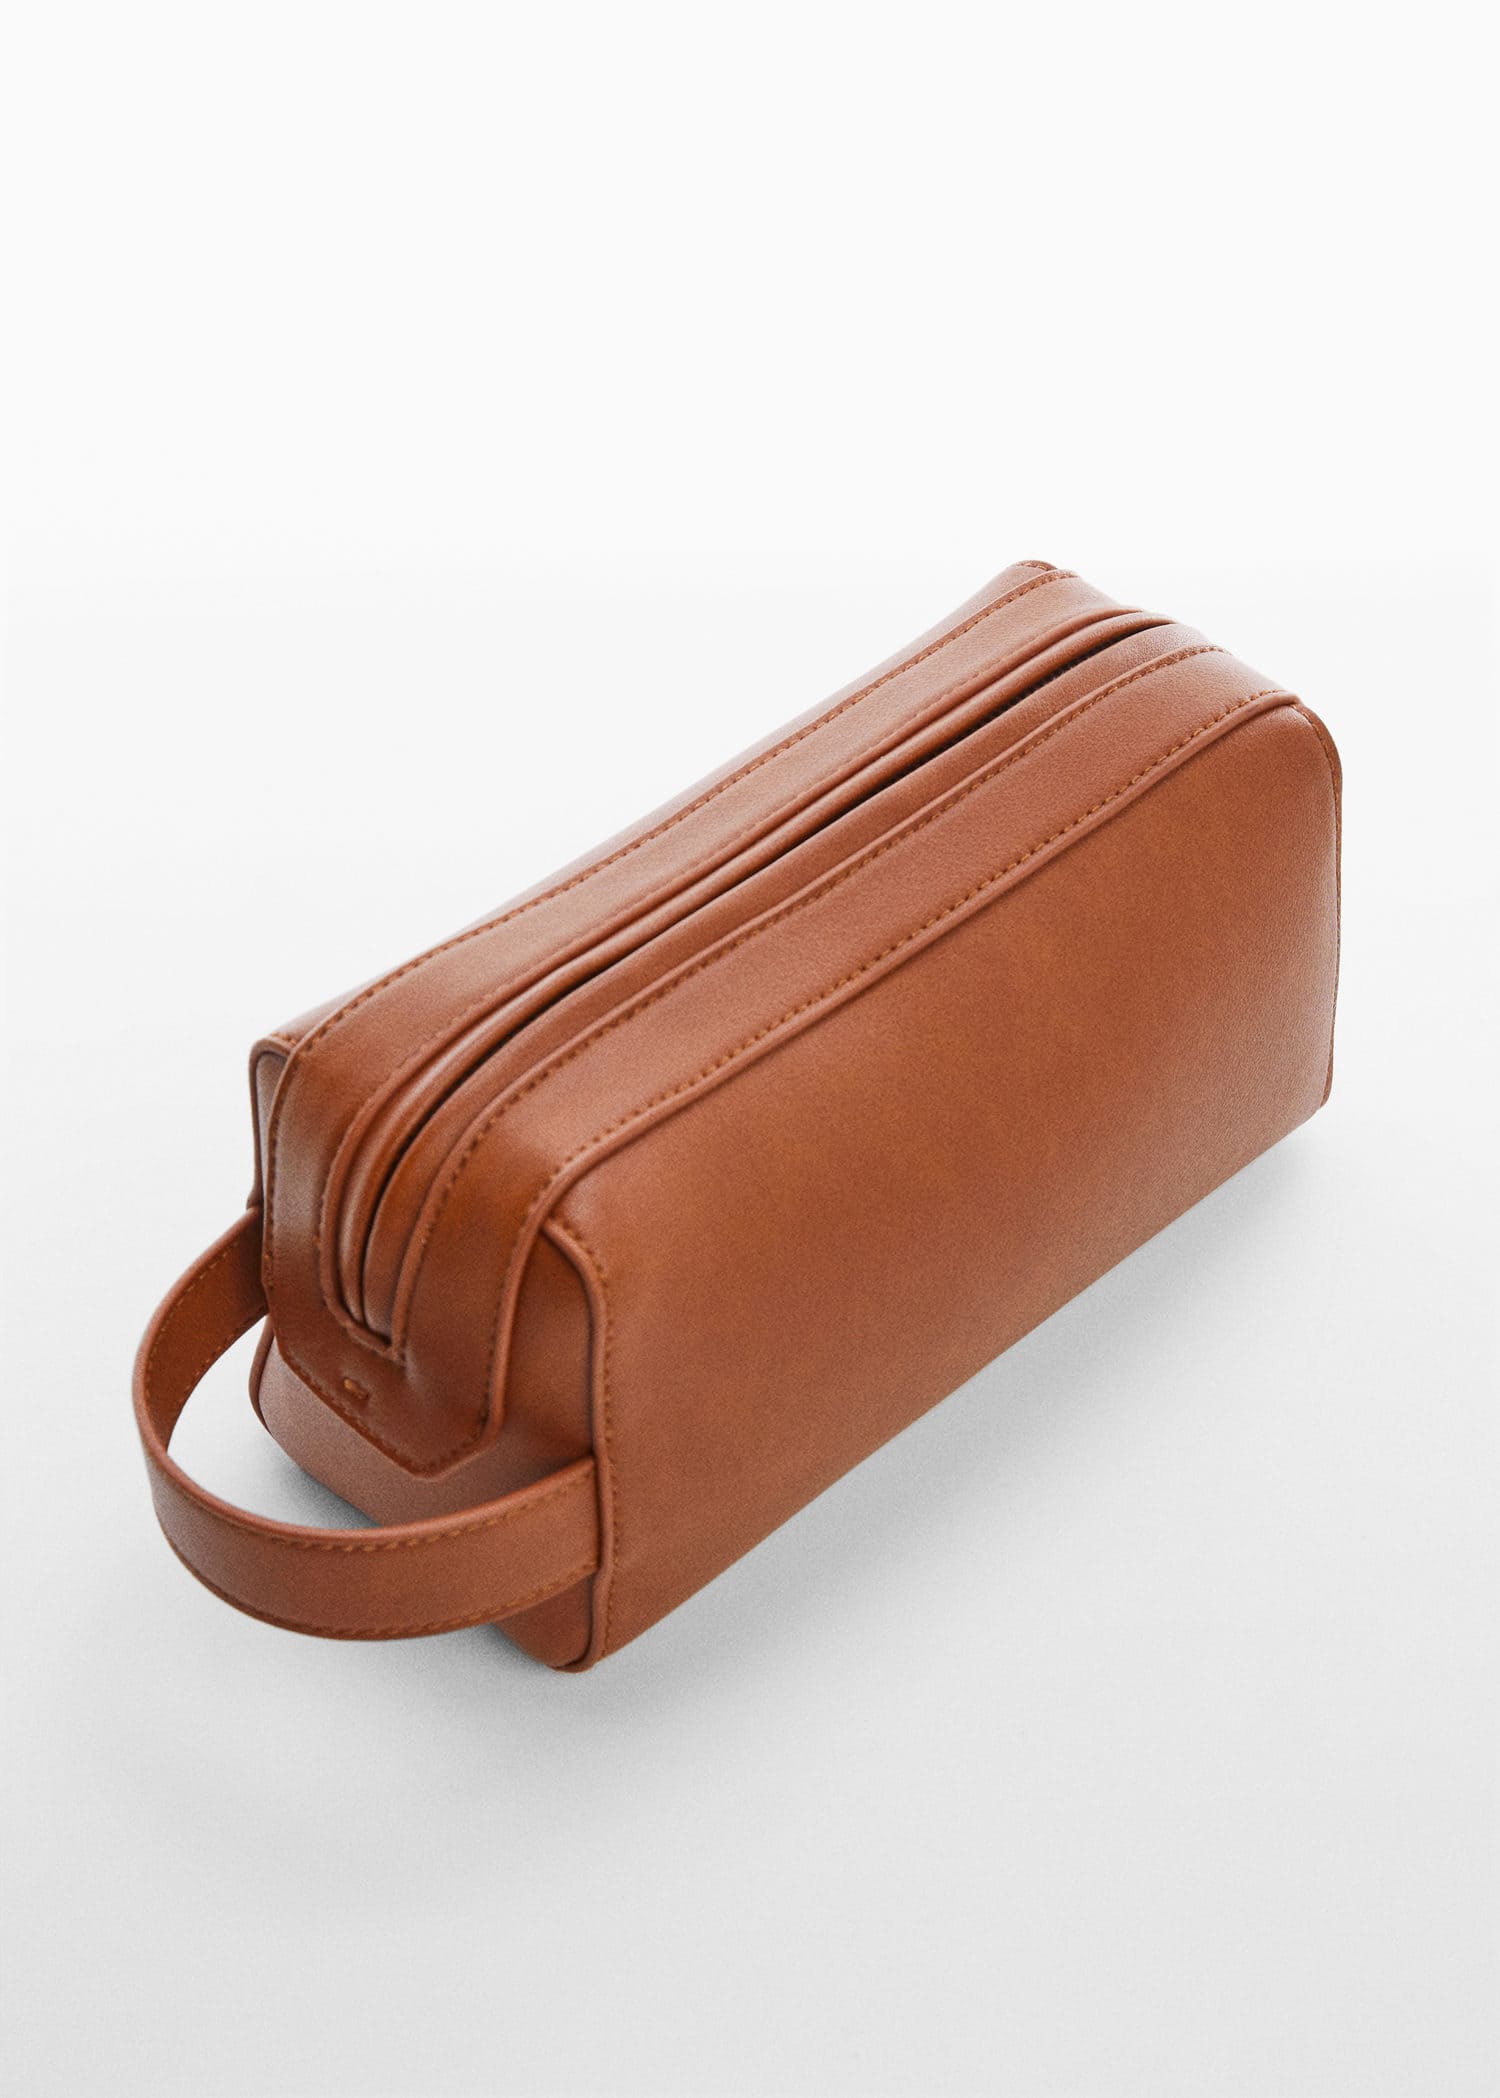 Leather cosmetic bag - Medium plane